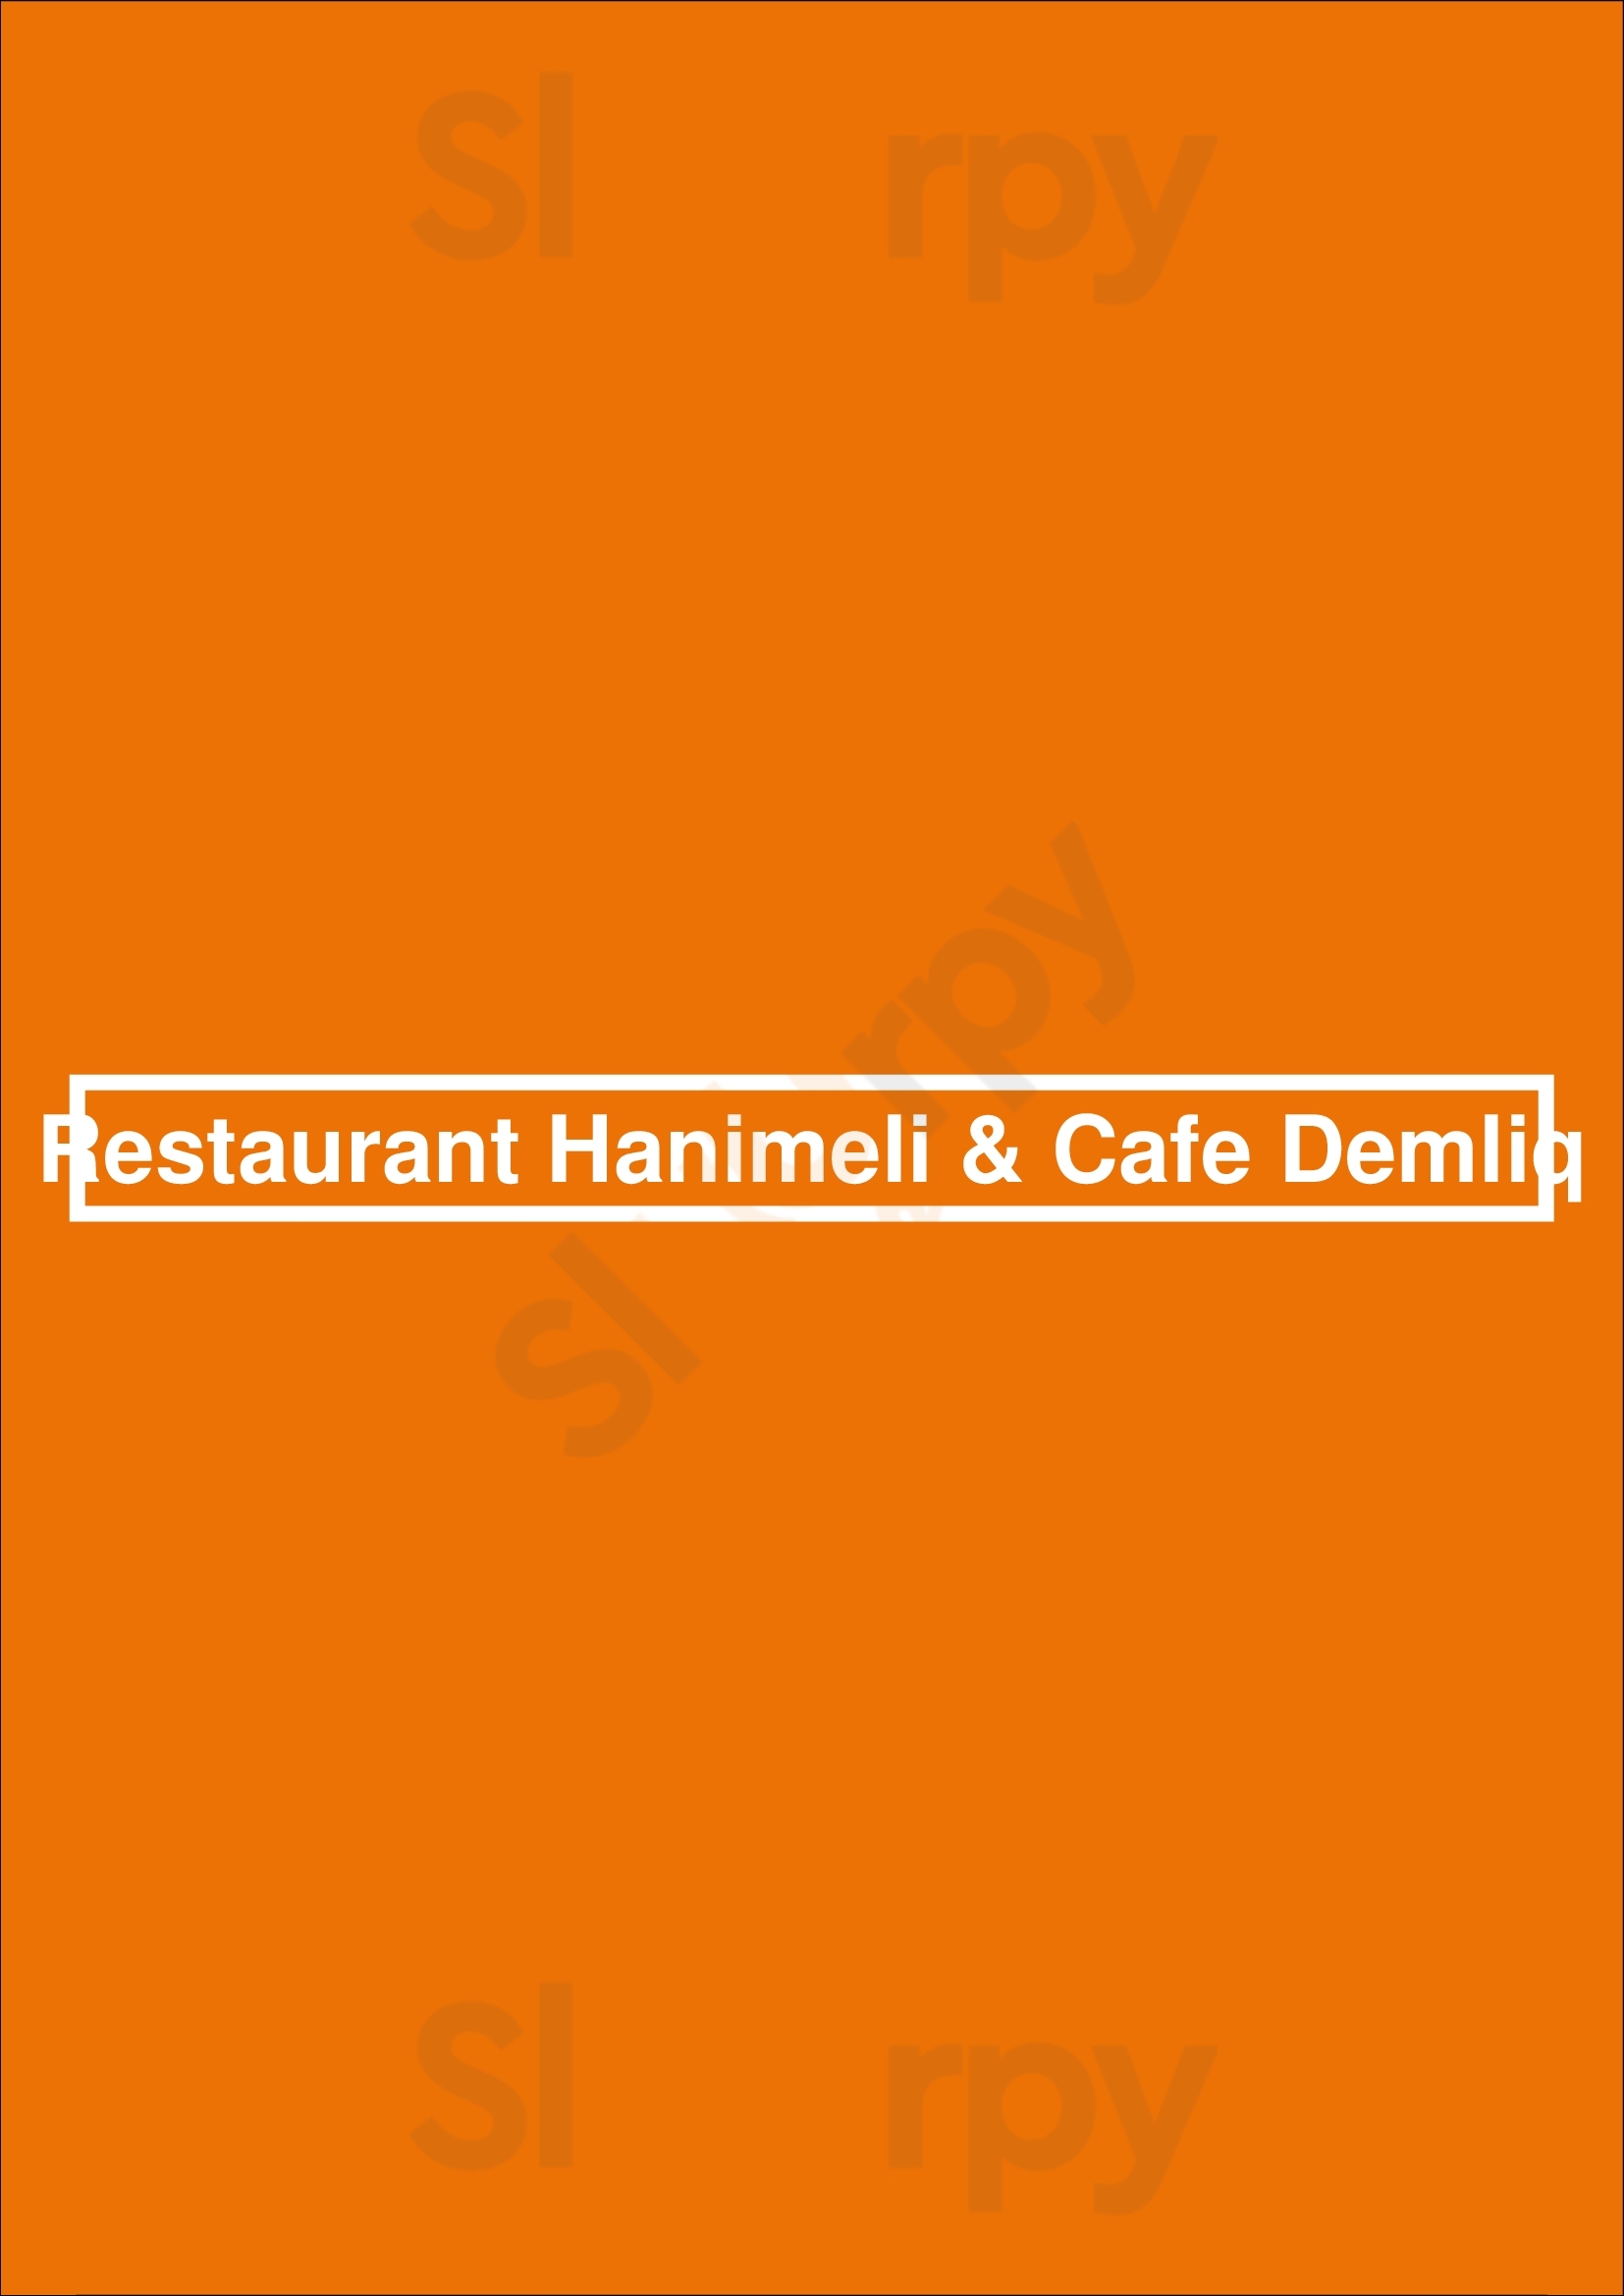 Restaurant Hanimeli & Cafe Demliq Amsterdam Menu - 1